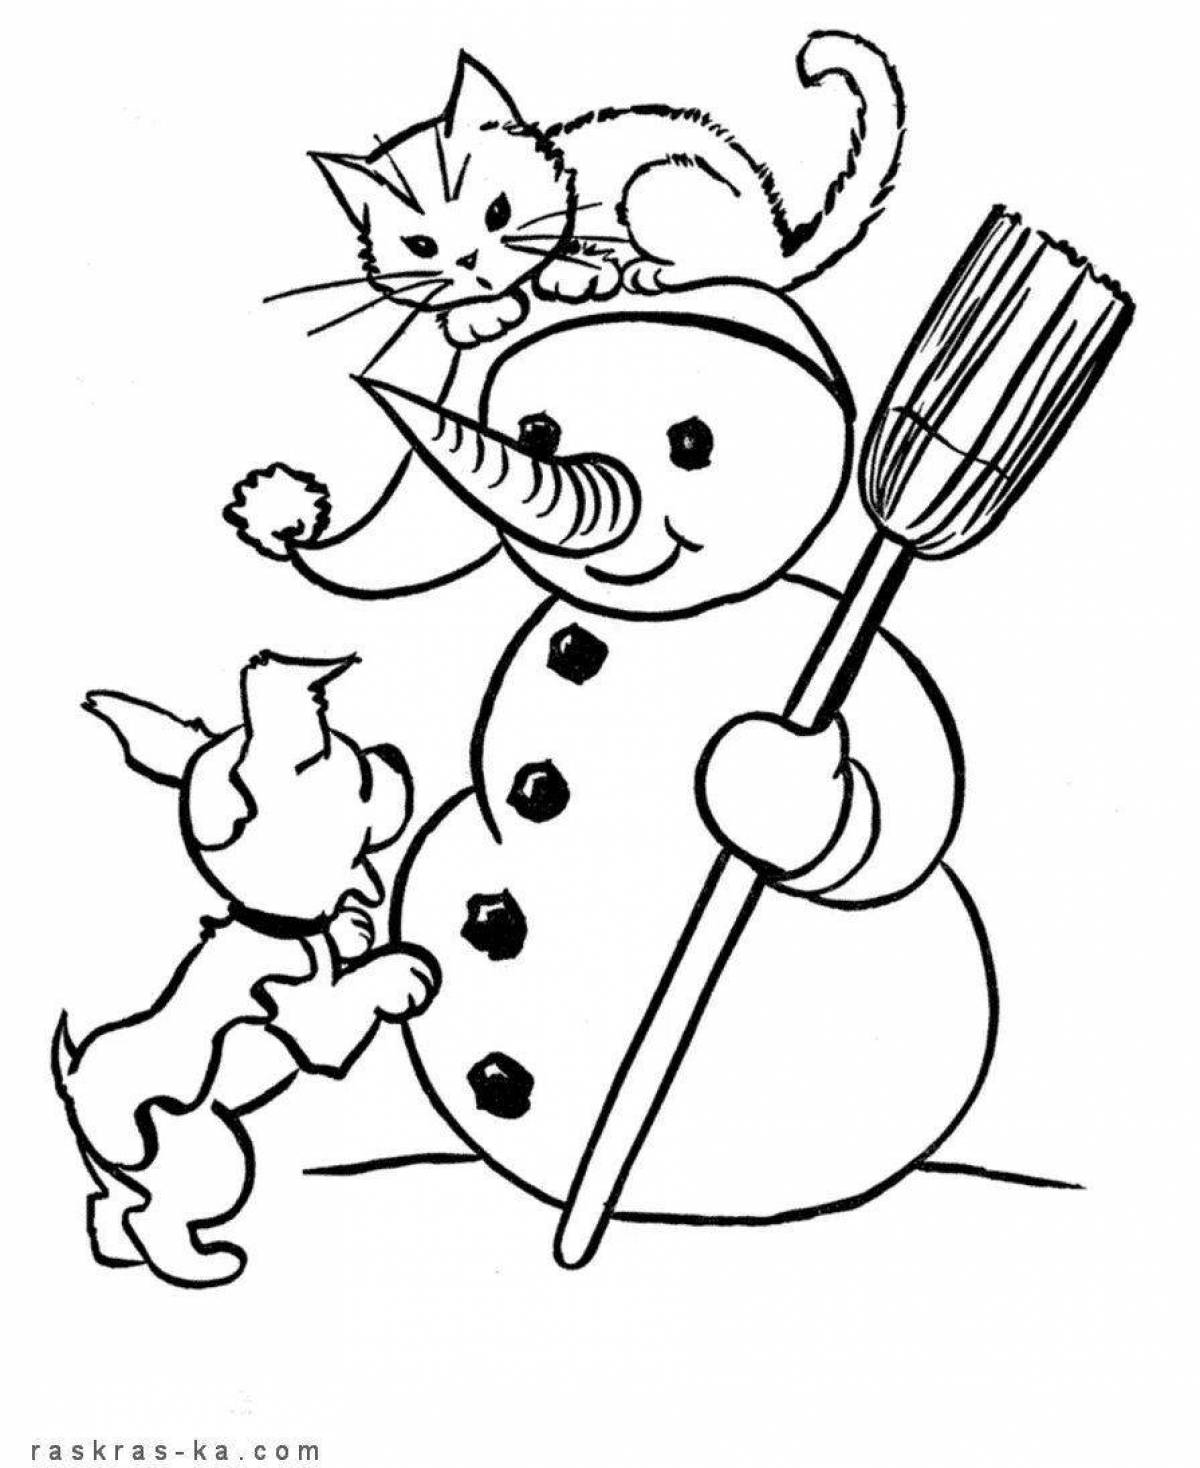 Festive Christmas cat coloring book